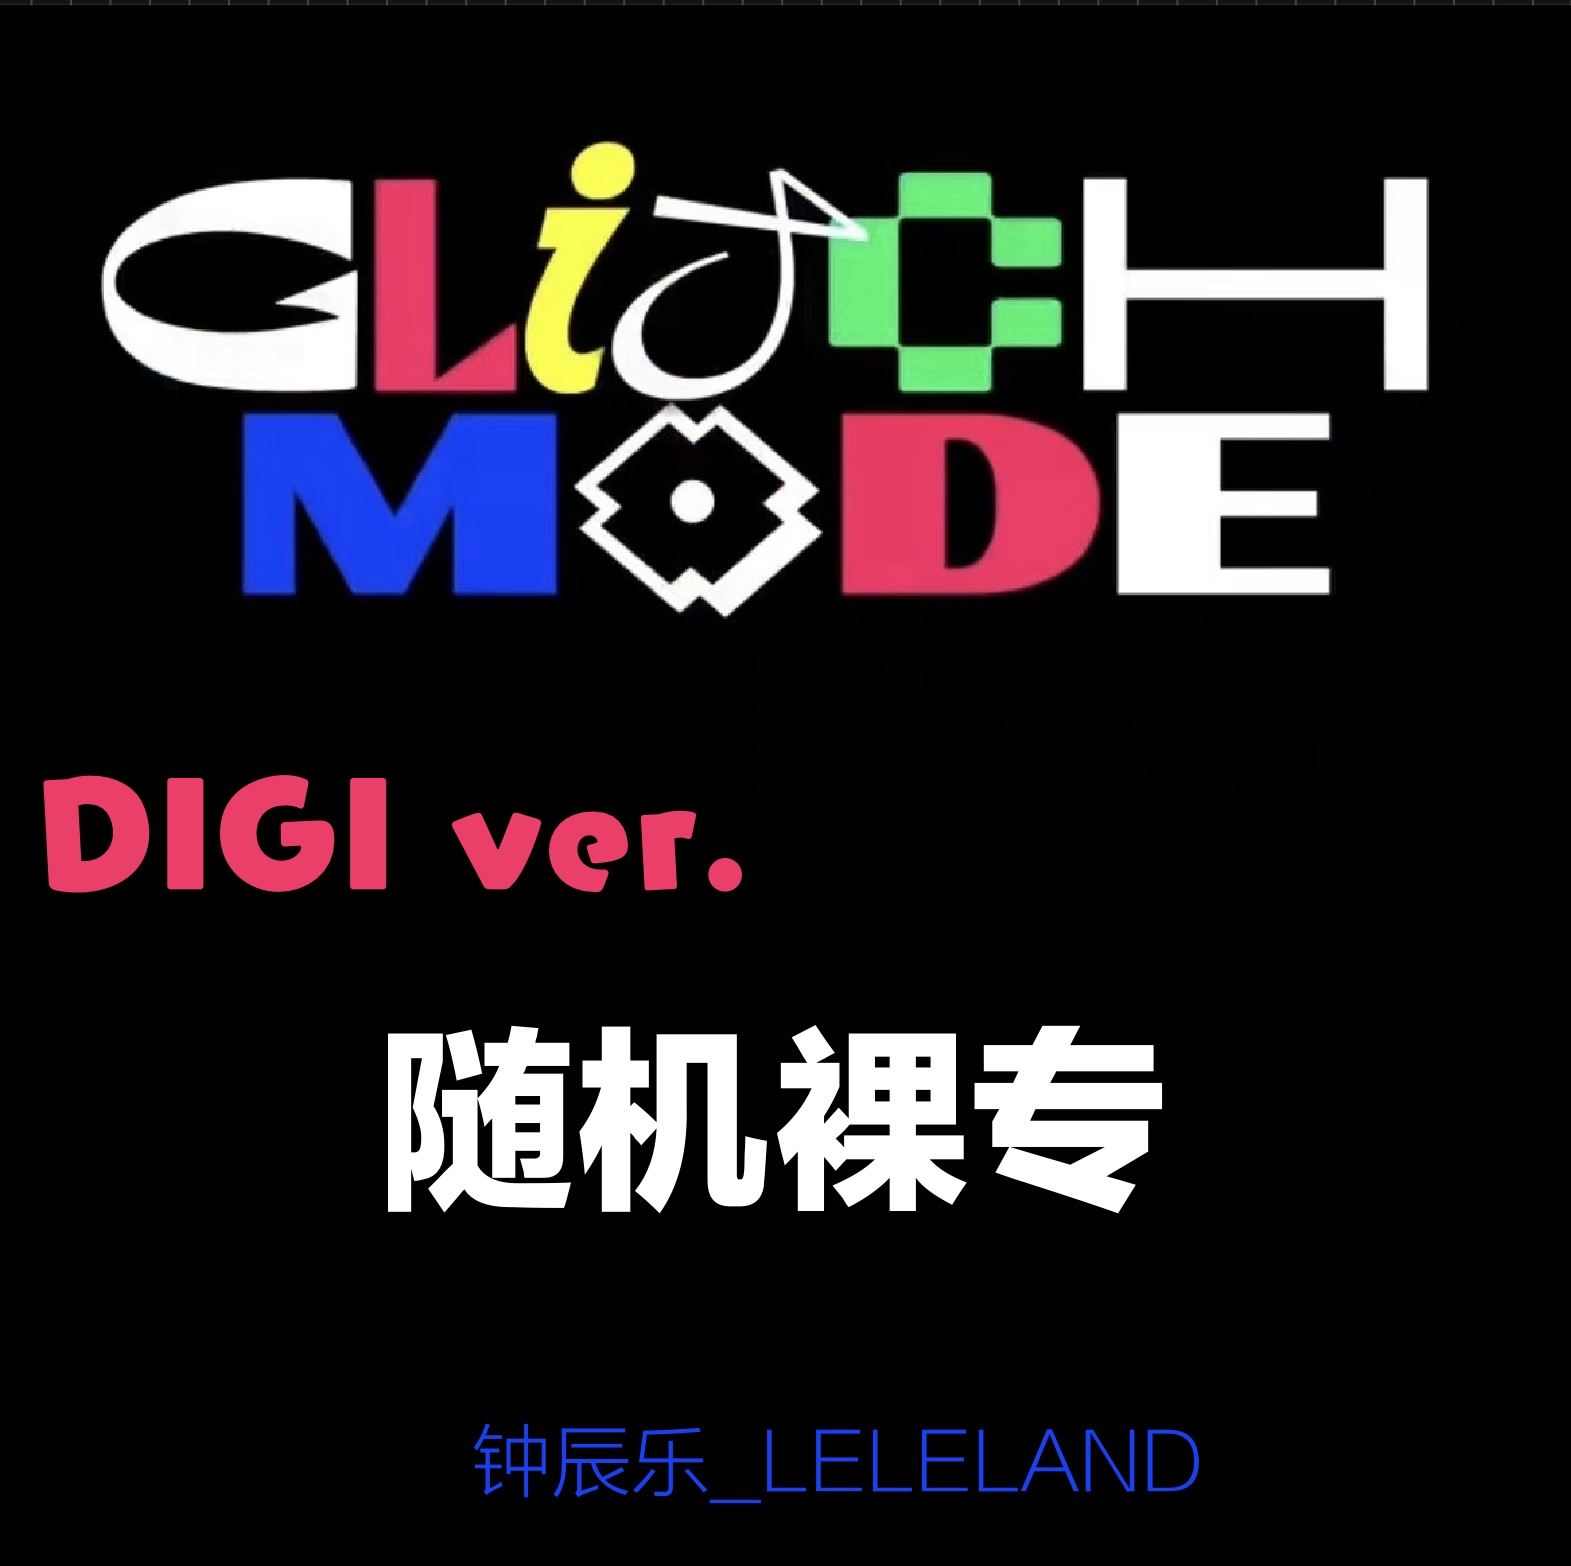 [全款 裸专 7站联合] NCT DREAM - 正规2辑 [Glitch Mode] (Digipack Ver.) (随机版本)_钟辰乐吧_ChenLeBar